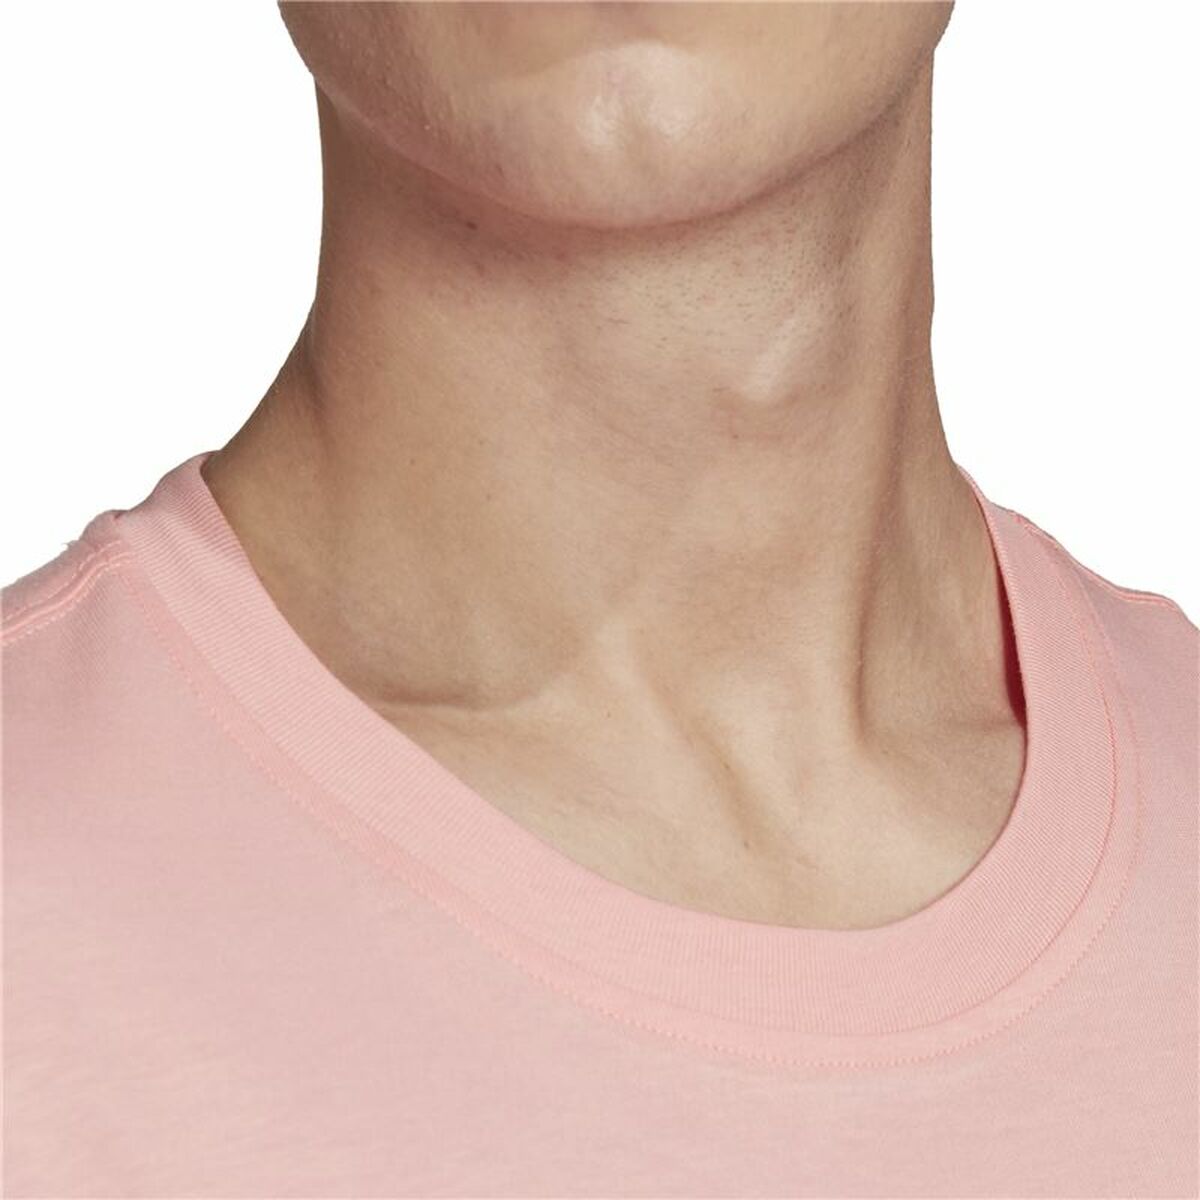 Men’s Short Sleeve T-Shirt Adidas Frontback Pink